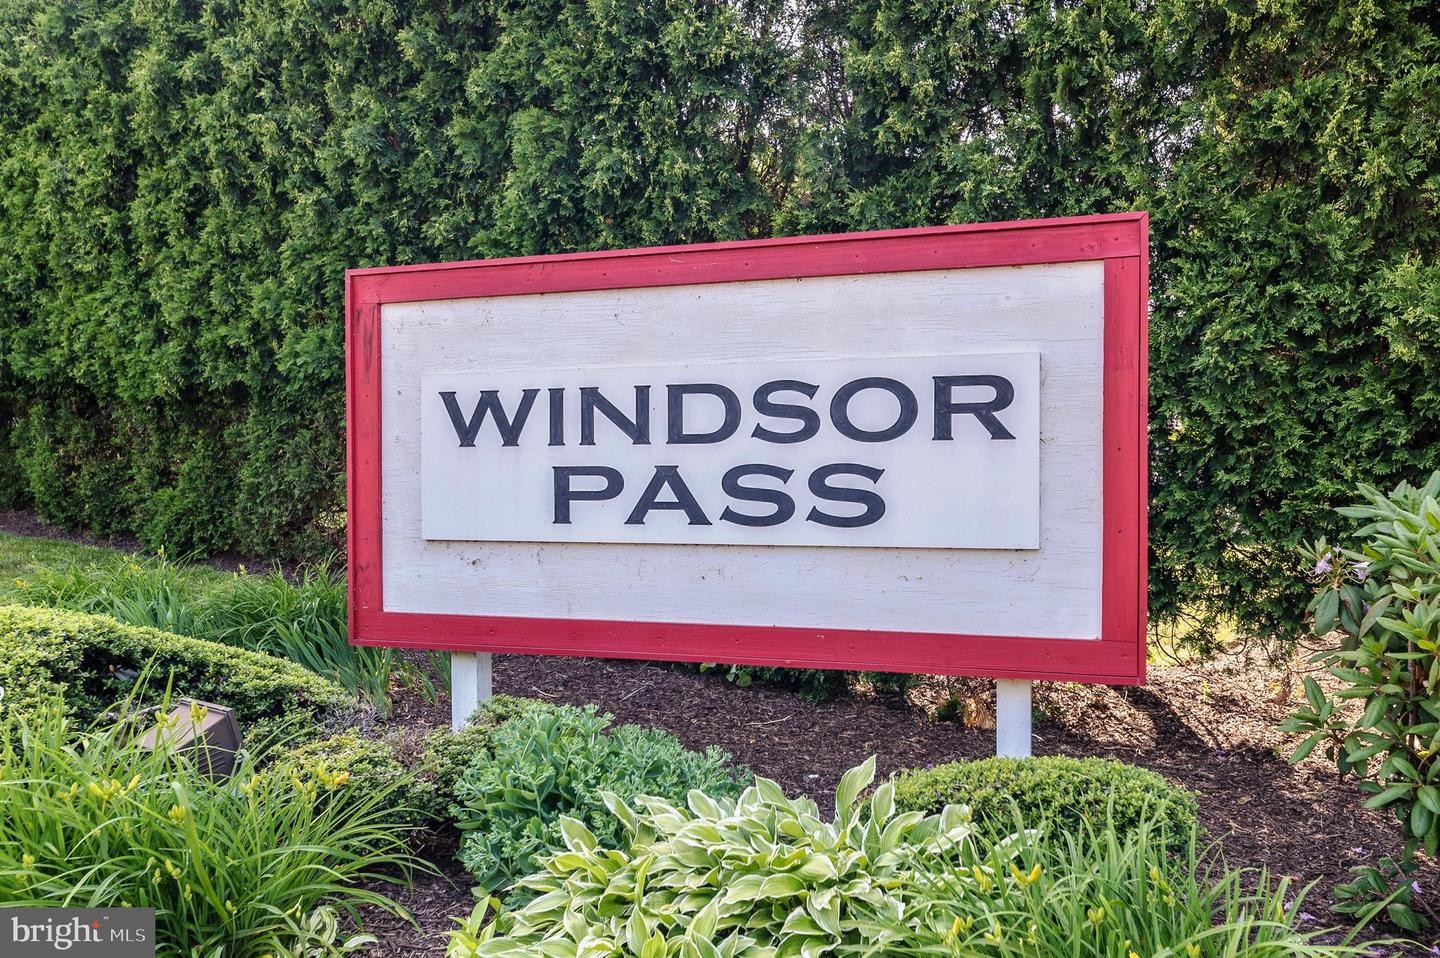 23. Windsor Pass 